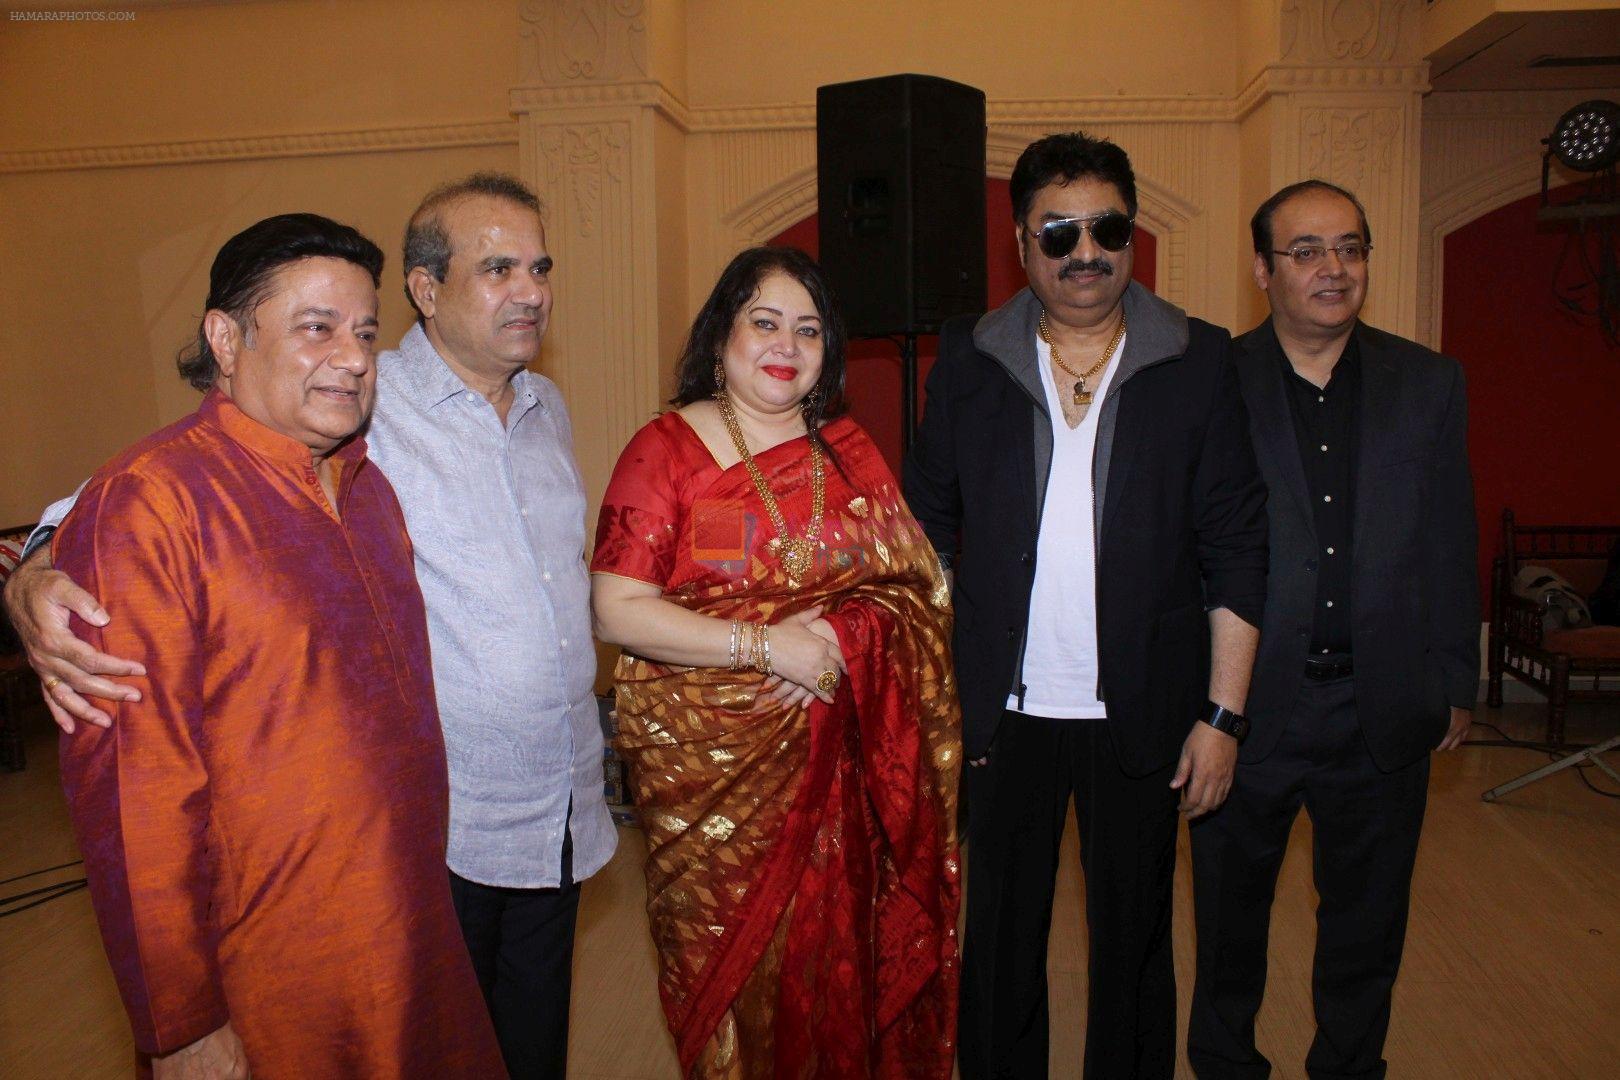 Anup Jalota, Suresh Wadkar, Kumar Sanu at the launch of New Album Tum Bin on 22nd Dec 2017